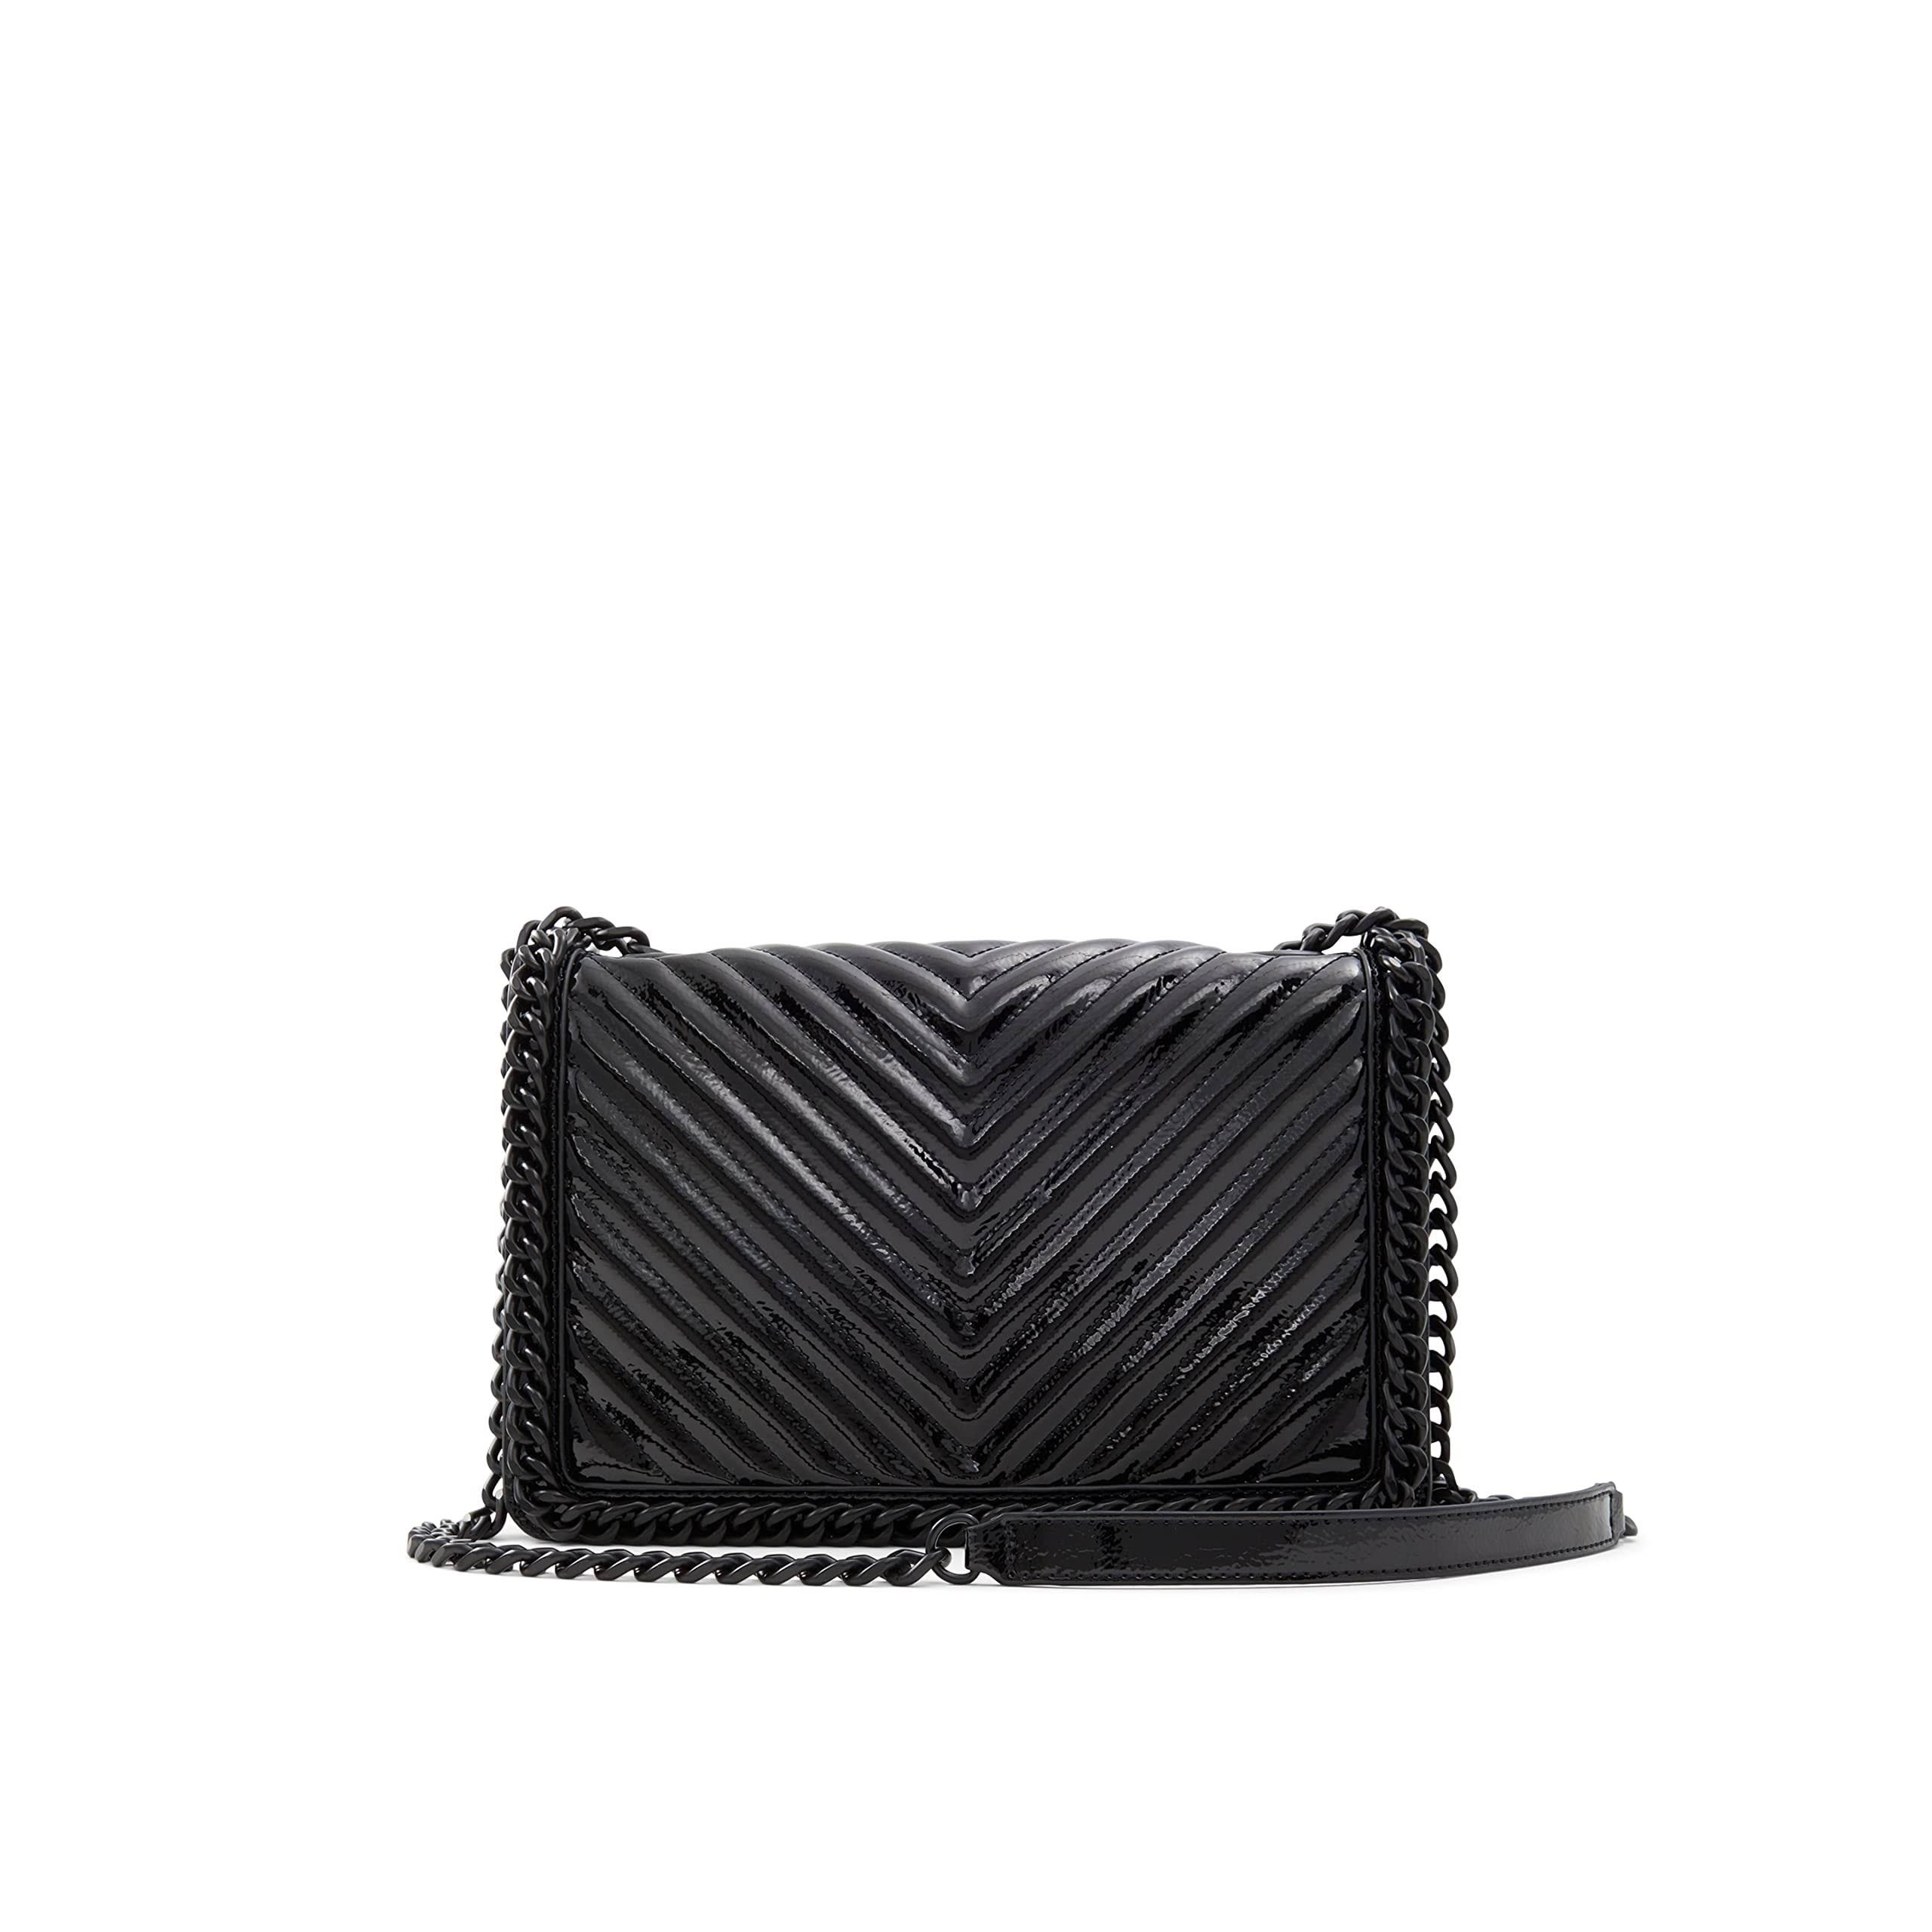 Elegant Black PU Leather Crossbody Bag by Aldo Greenwald - Adjustable Strap & Magnetic Closure | Image